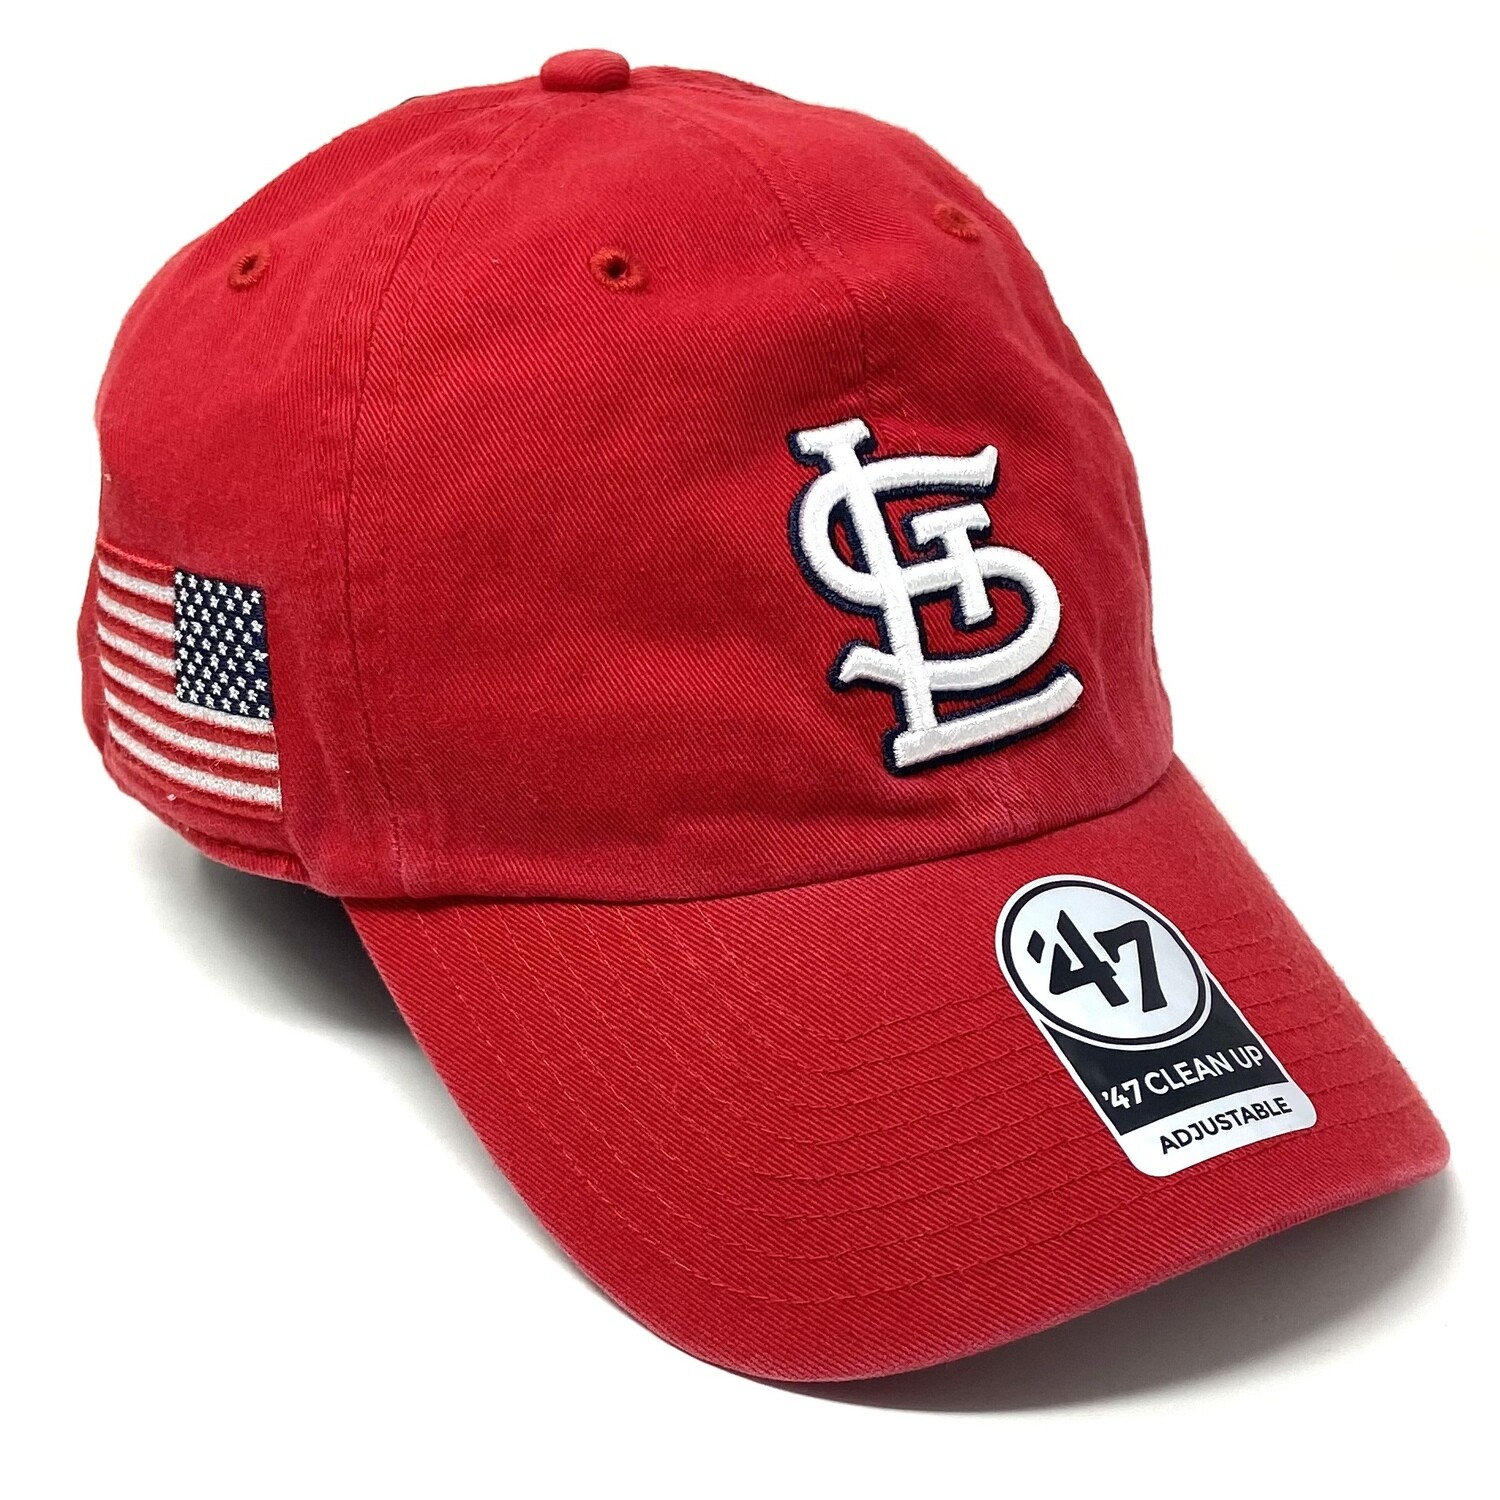 St. Louis Cardinals Men's 47 Brand Adjustable Hat